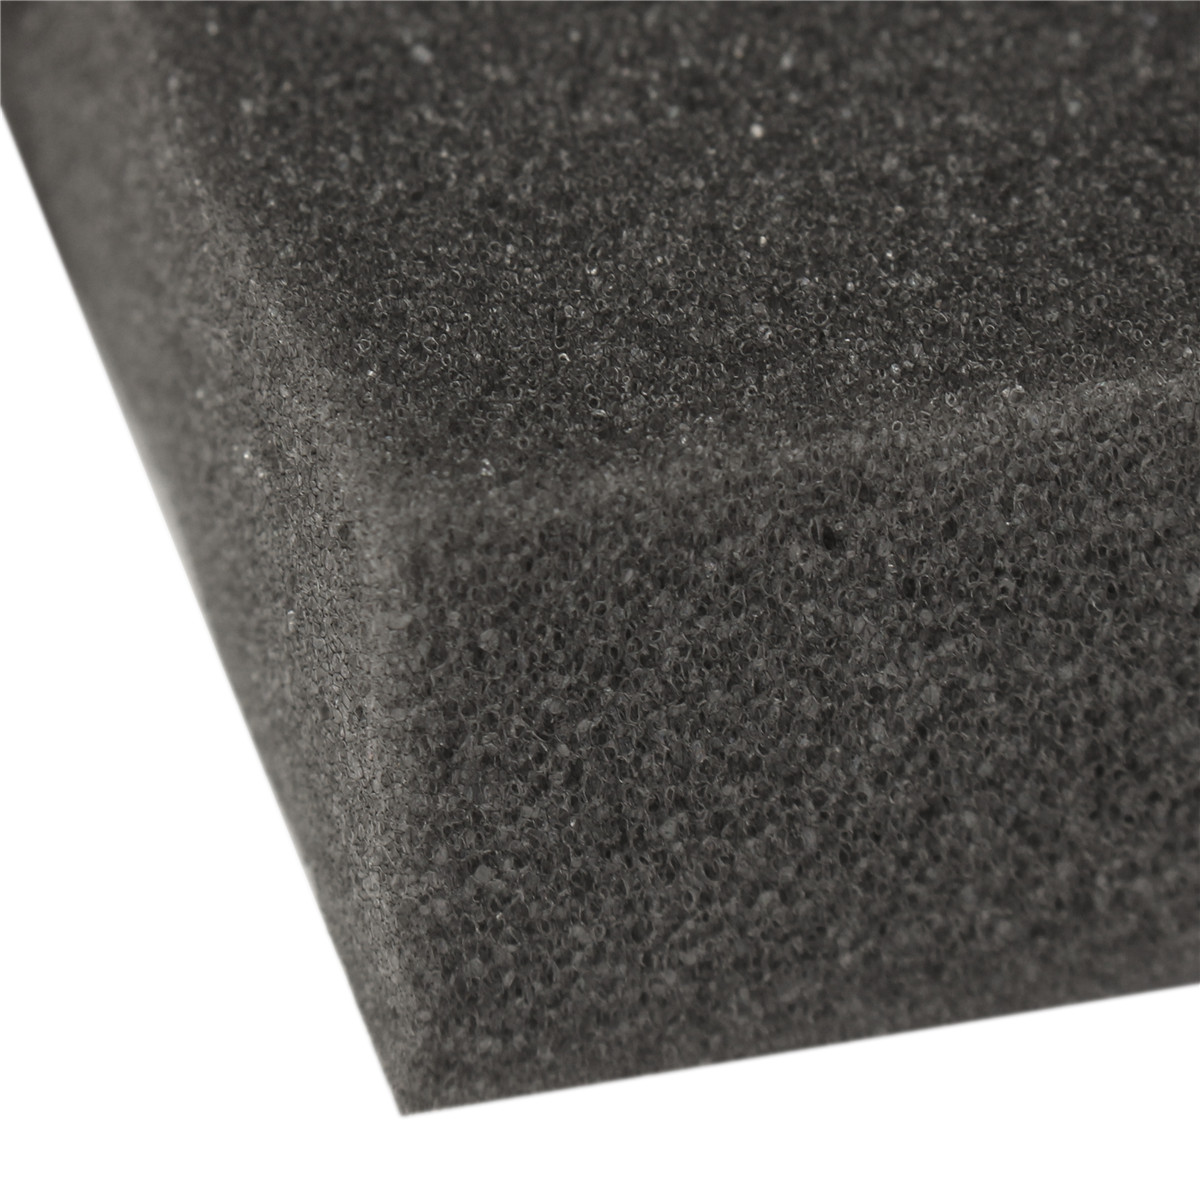 200x60x25cm-Cushion-Foam-Rubber-Replacement-Seat-Firm-Polyurethane-Foam-1213138-4